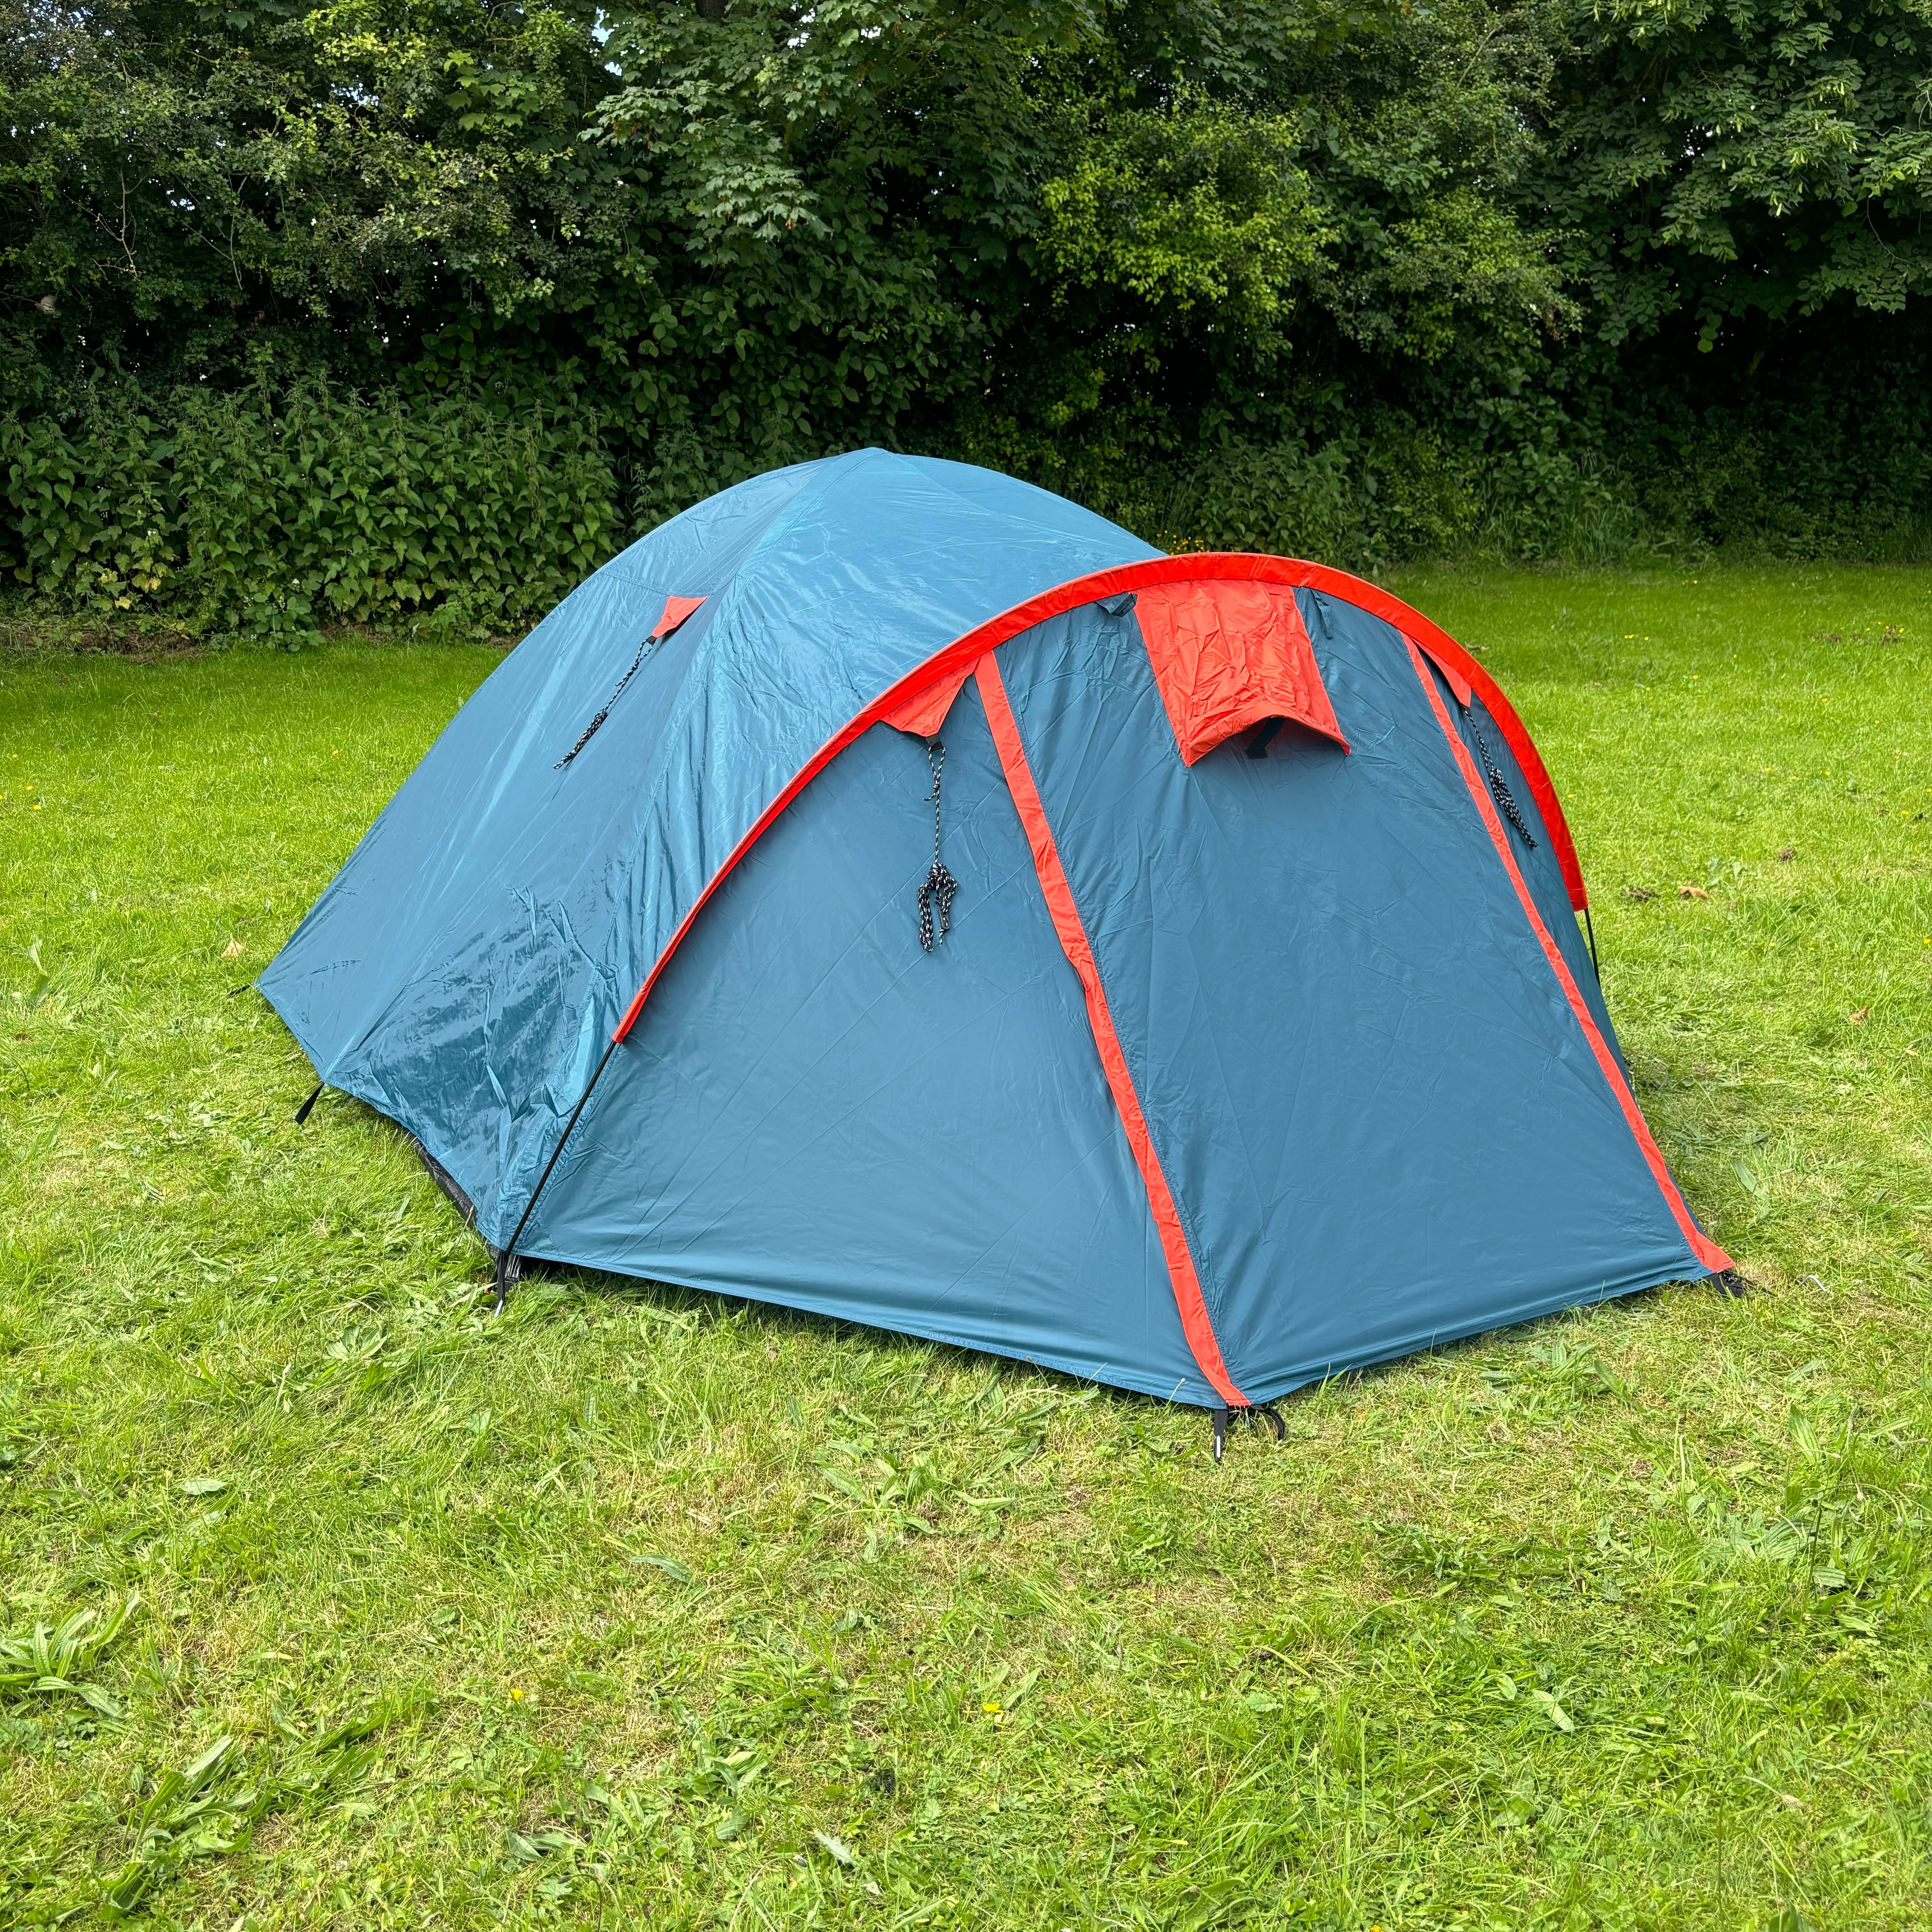 Tambu Acamp 3-4 Person Dome Tent - Green / Bright Red - 55% OFF